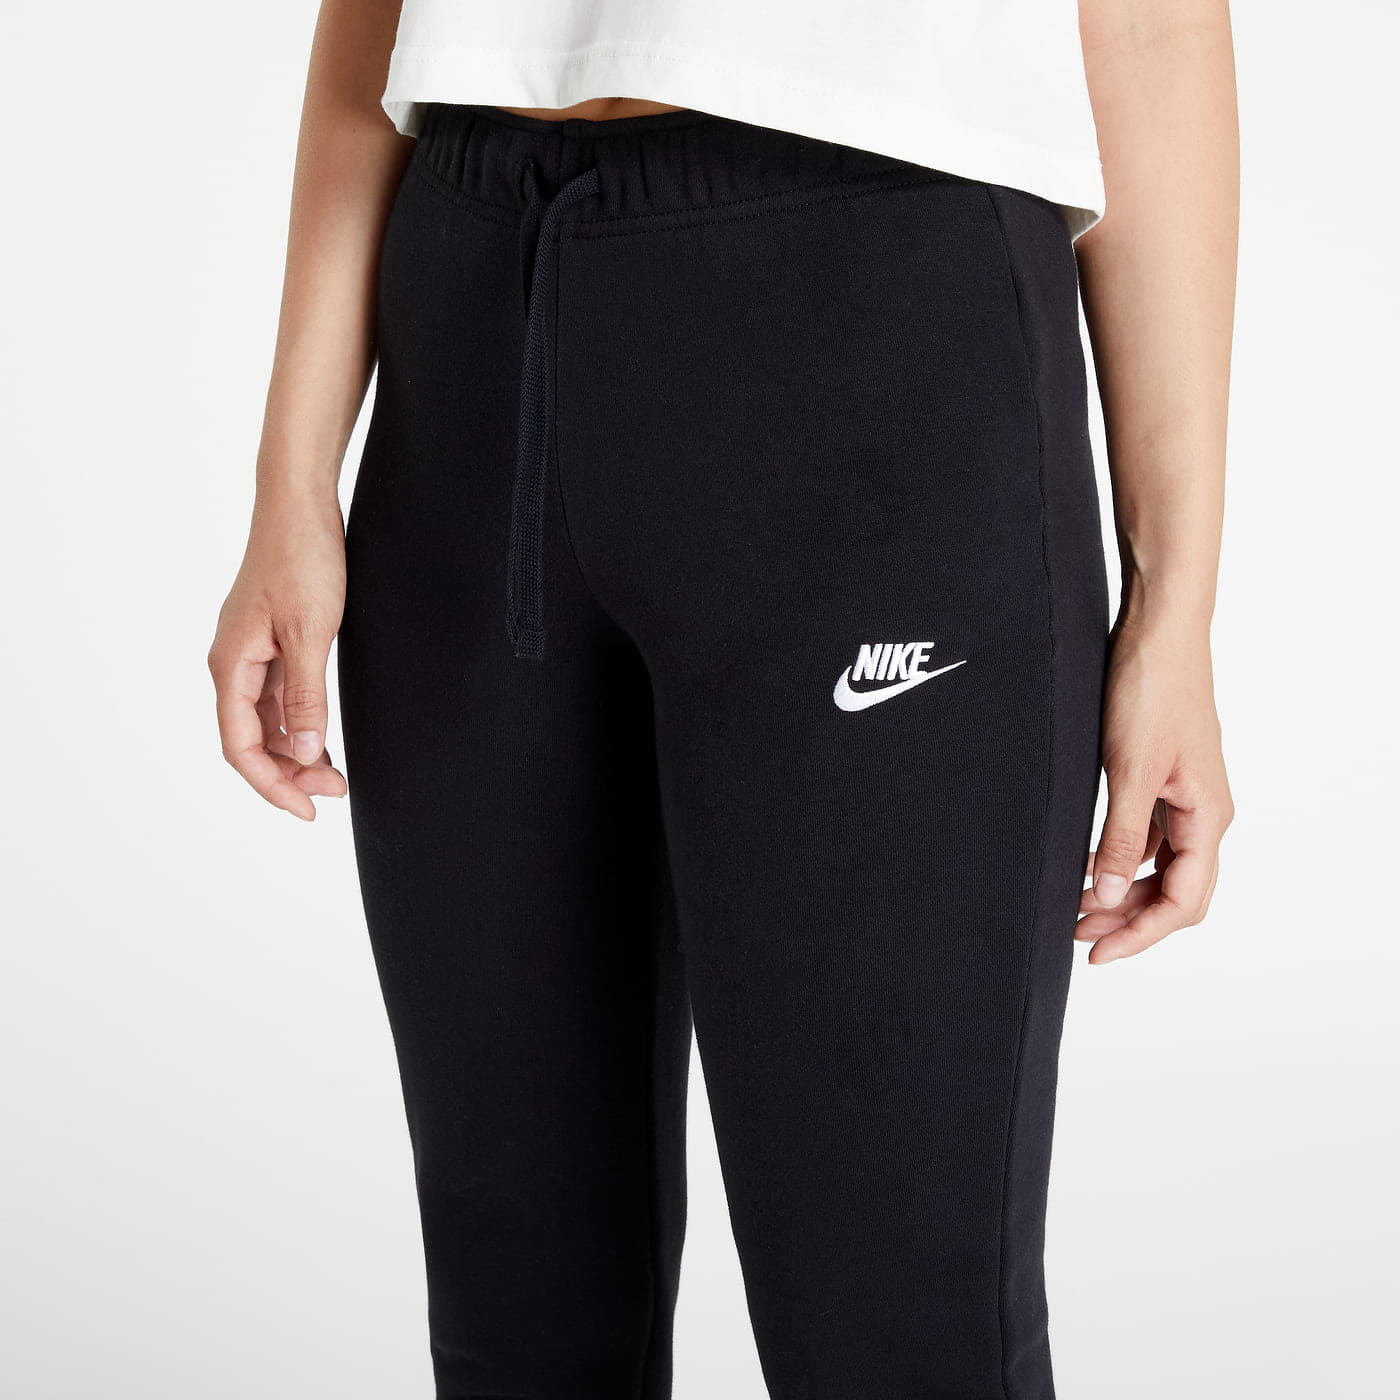 Pantalon Taille Mi-Haute Nike Sportswear Club Fleece pour Femme -  DQ5174-100 - Blanc